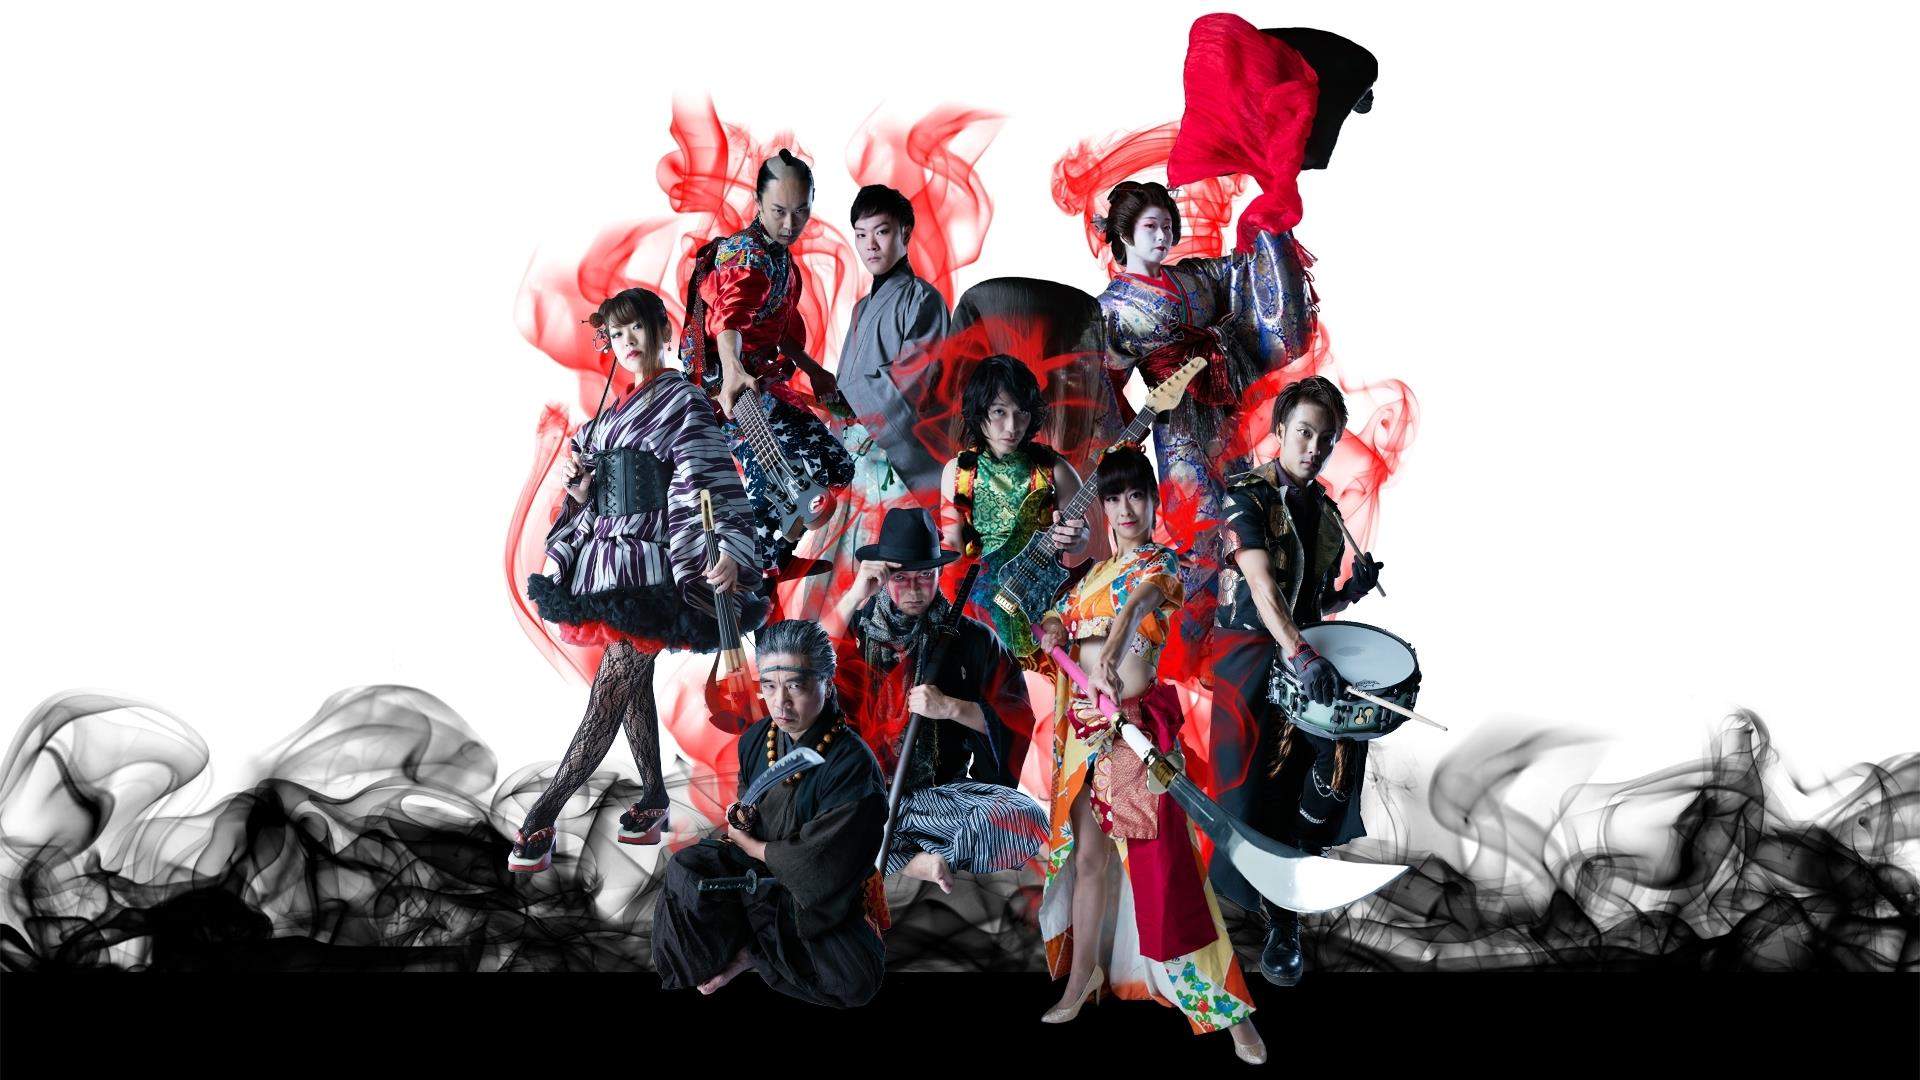 Hatenkohro – Japanese Heavy Metal Circus Orchestra